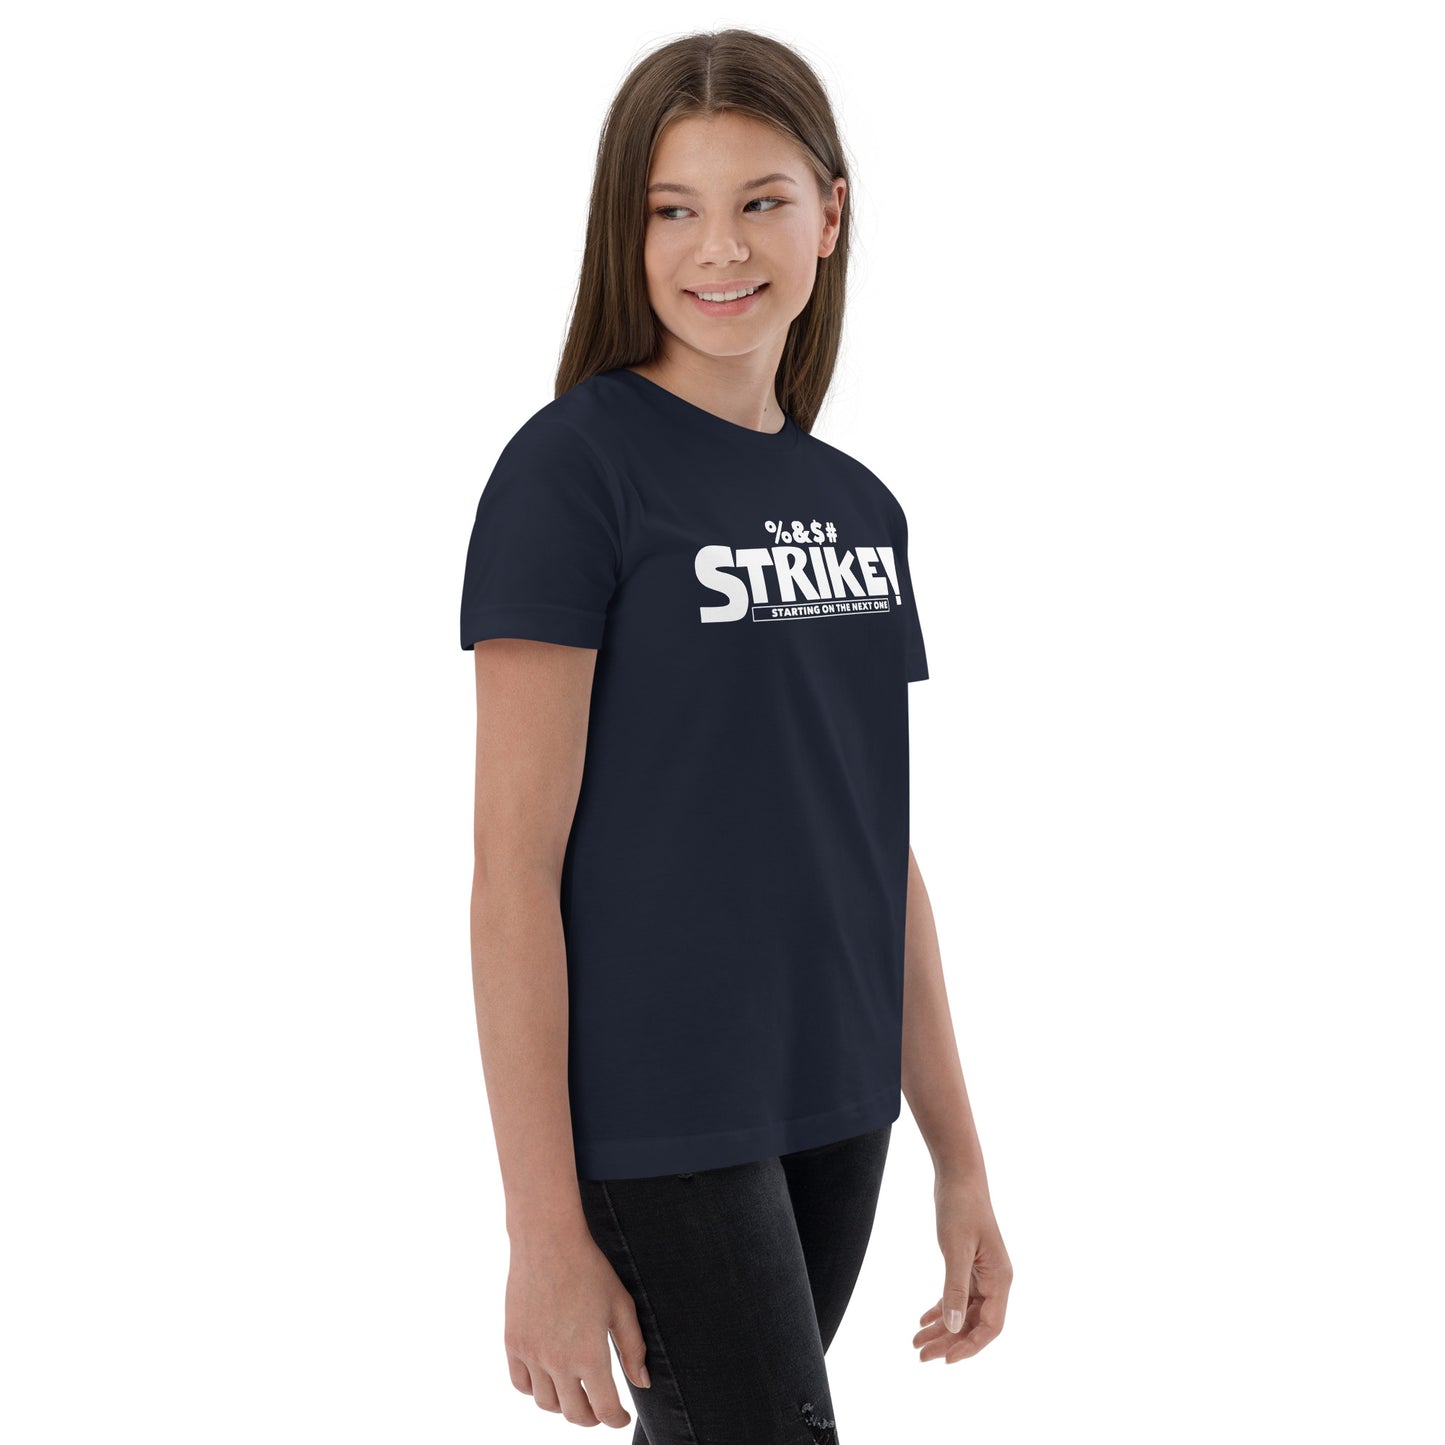 STRIKE! Youth Jersey T-Shirt